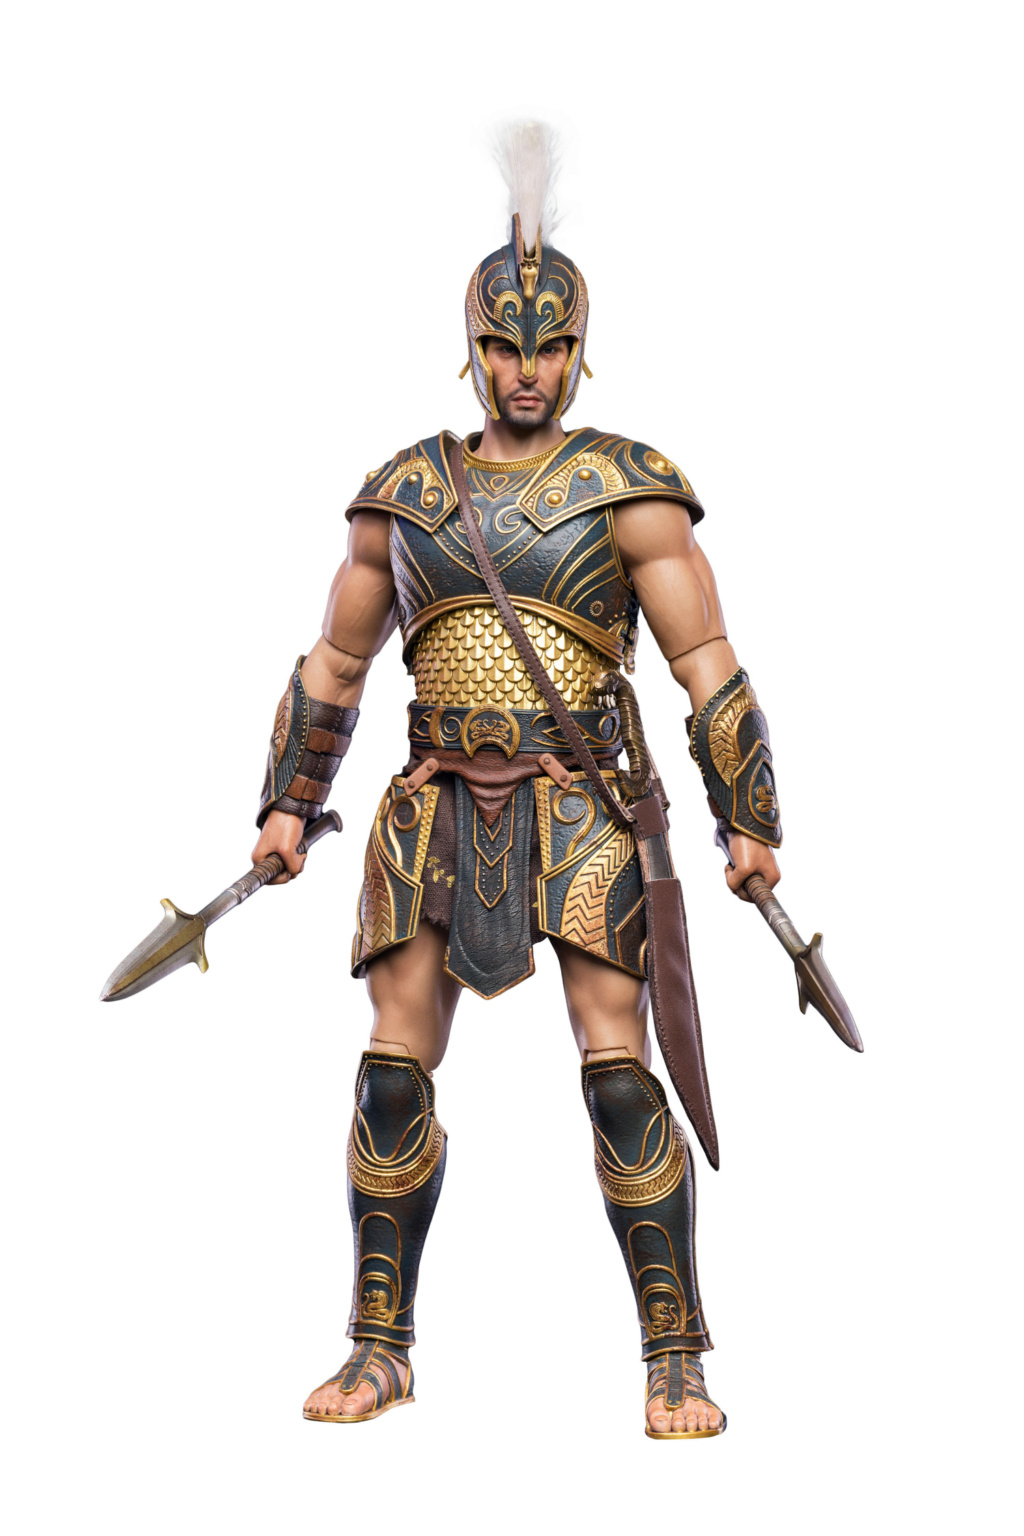 GreekHero - NEW PRODUCT: HHMODEL & HAOYUTOYS: 1/6 Imperial Legion - Greek Hero Action Figure #HH18062 20261512